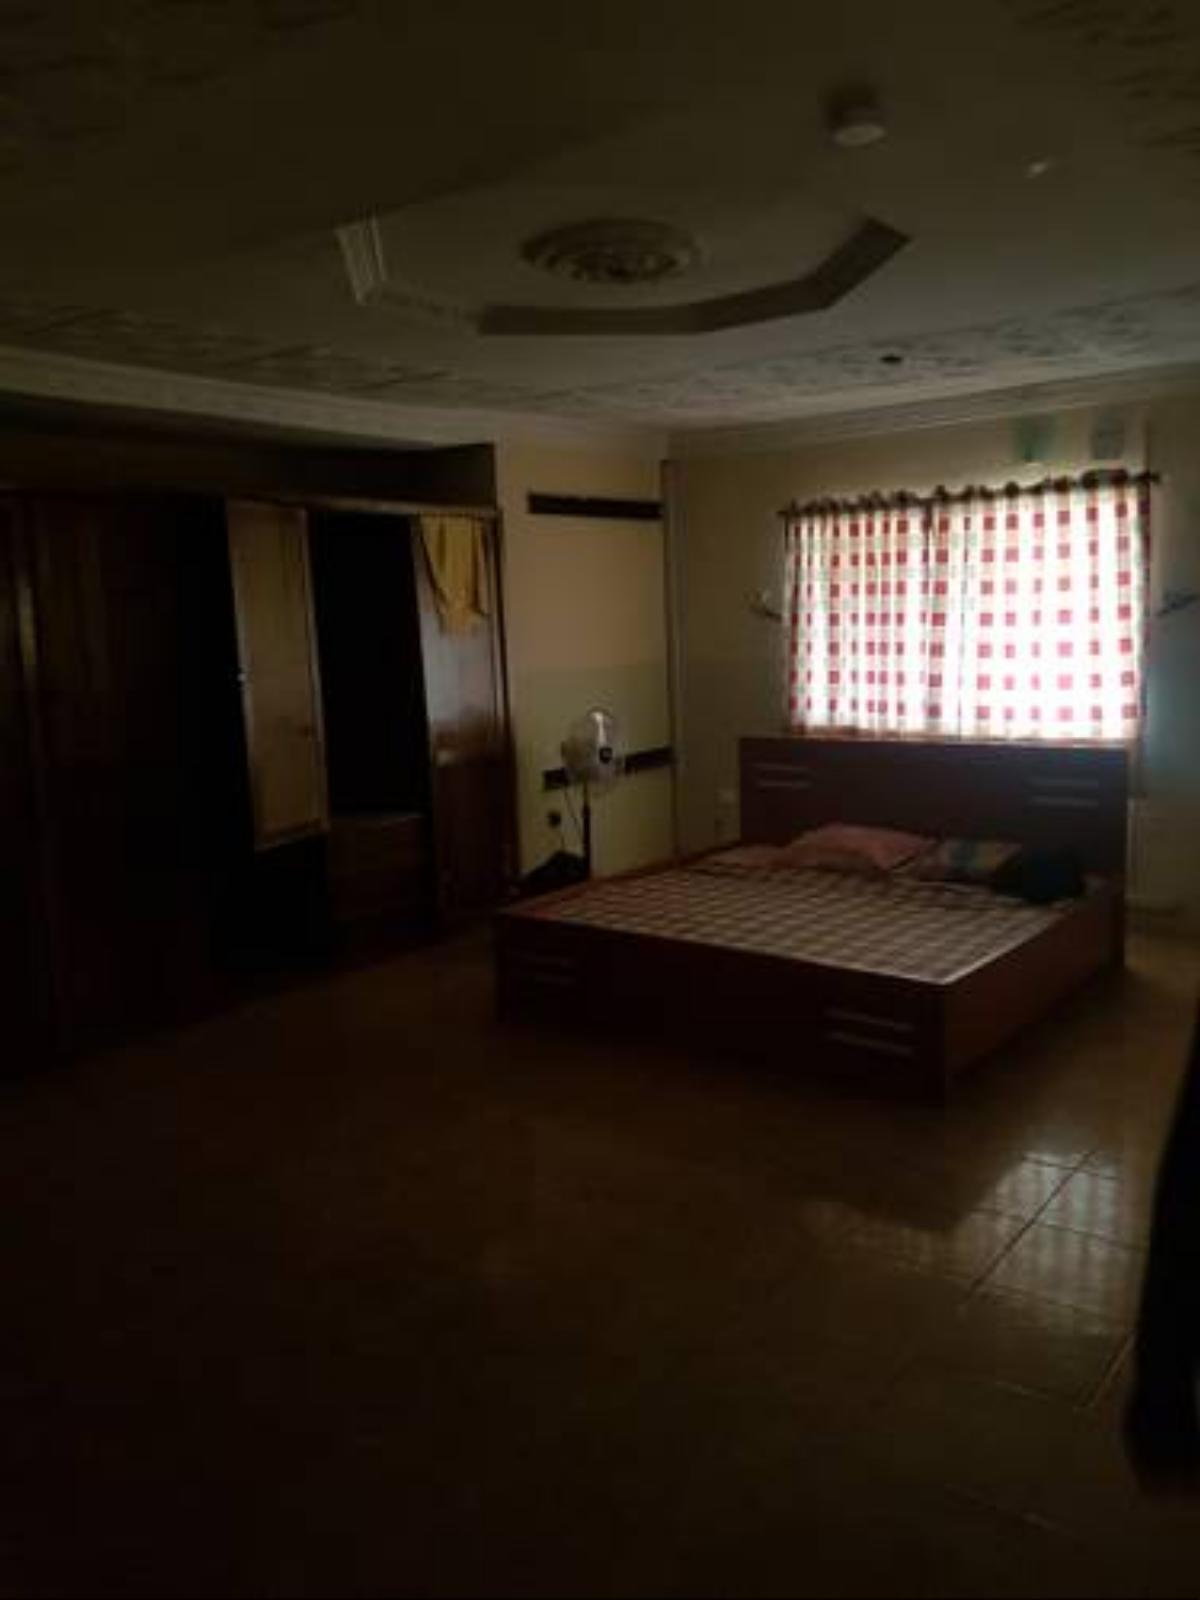 Angelic 5 Guest House Hotel Ibadan Nigeria